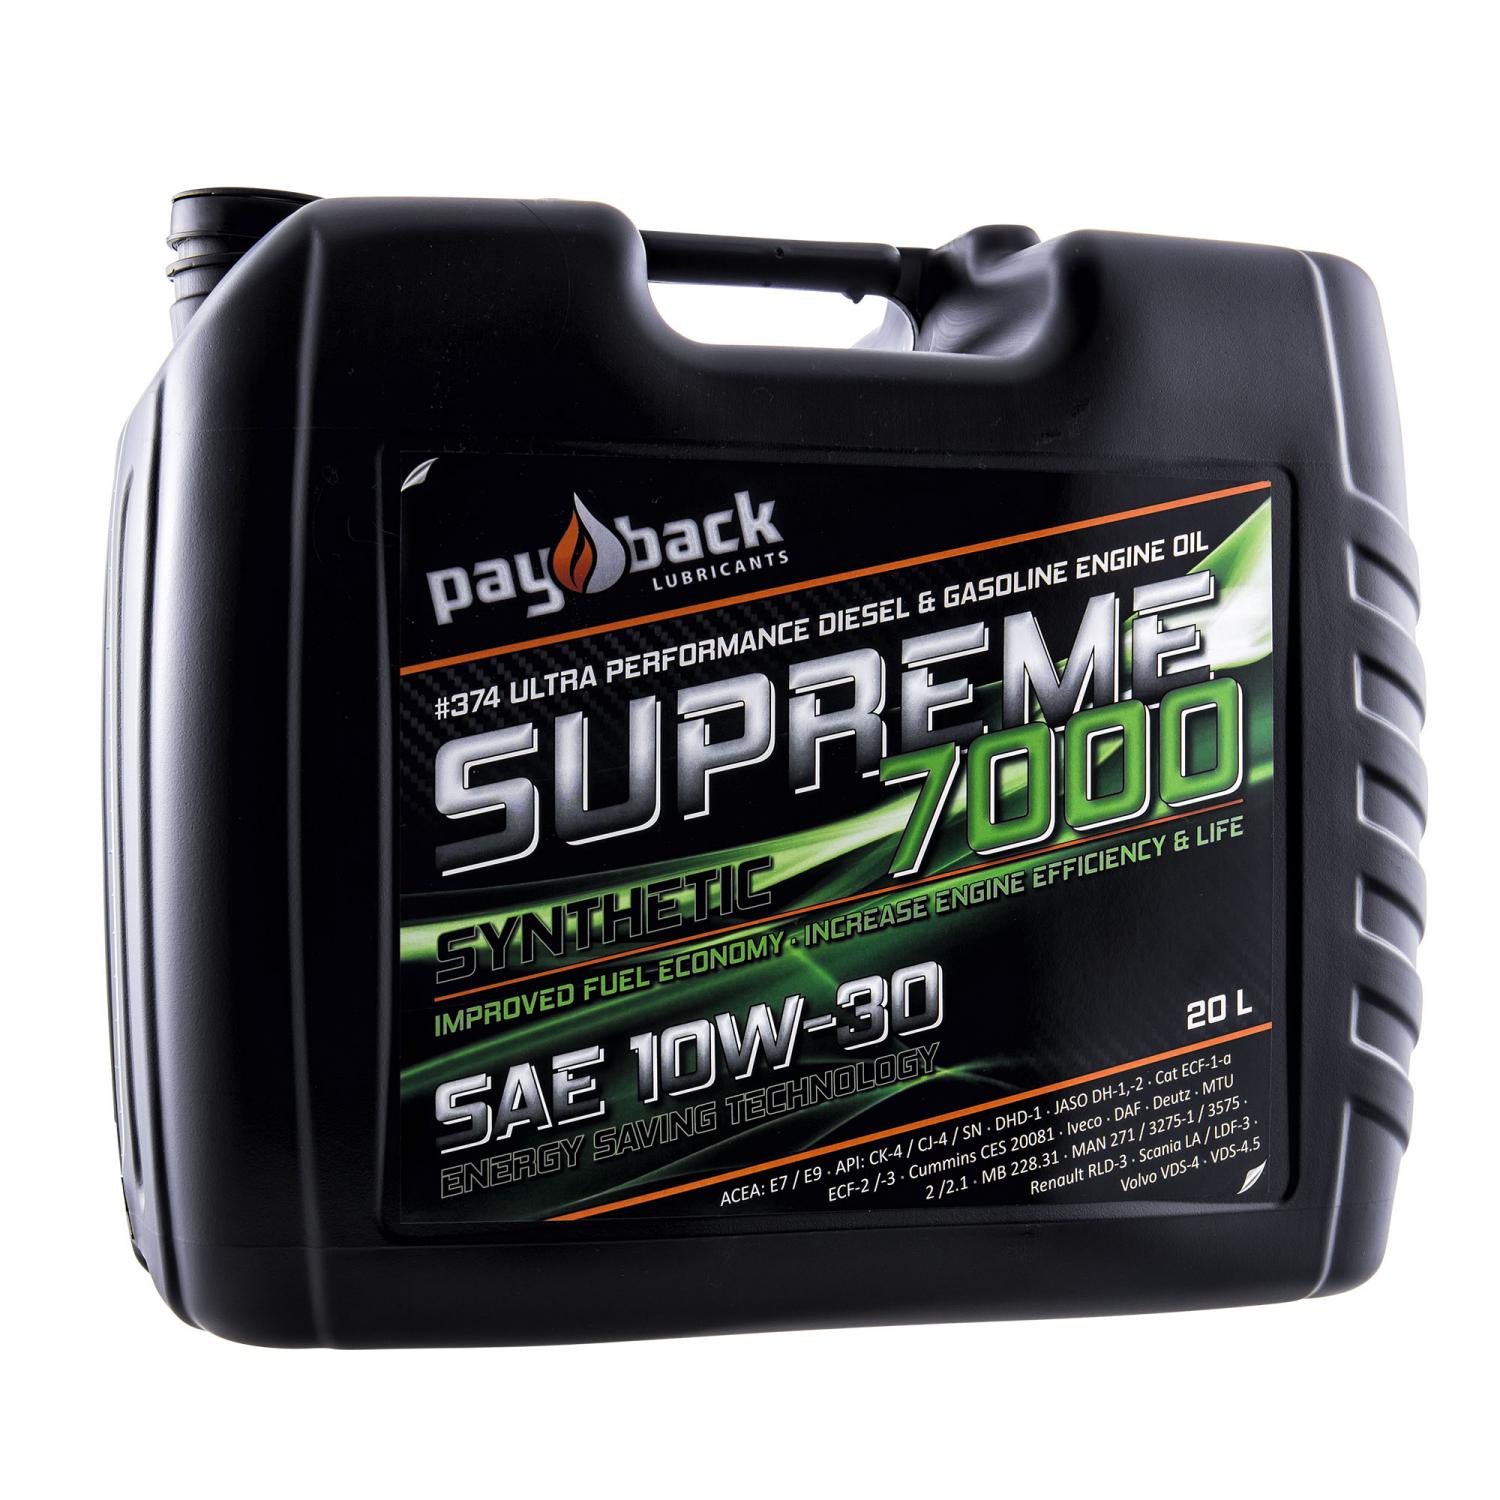 Payback #374 10W-30 Supreme 7000 Motorolja 20L